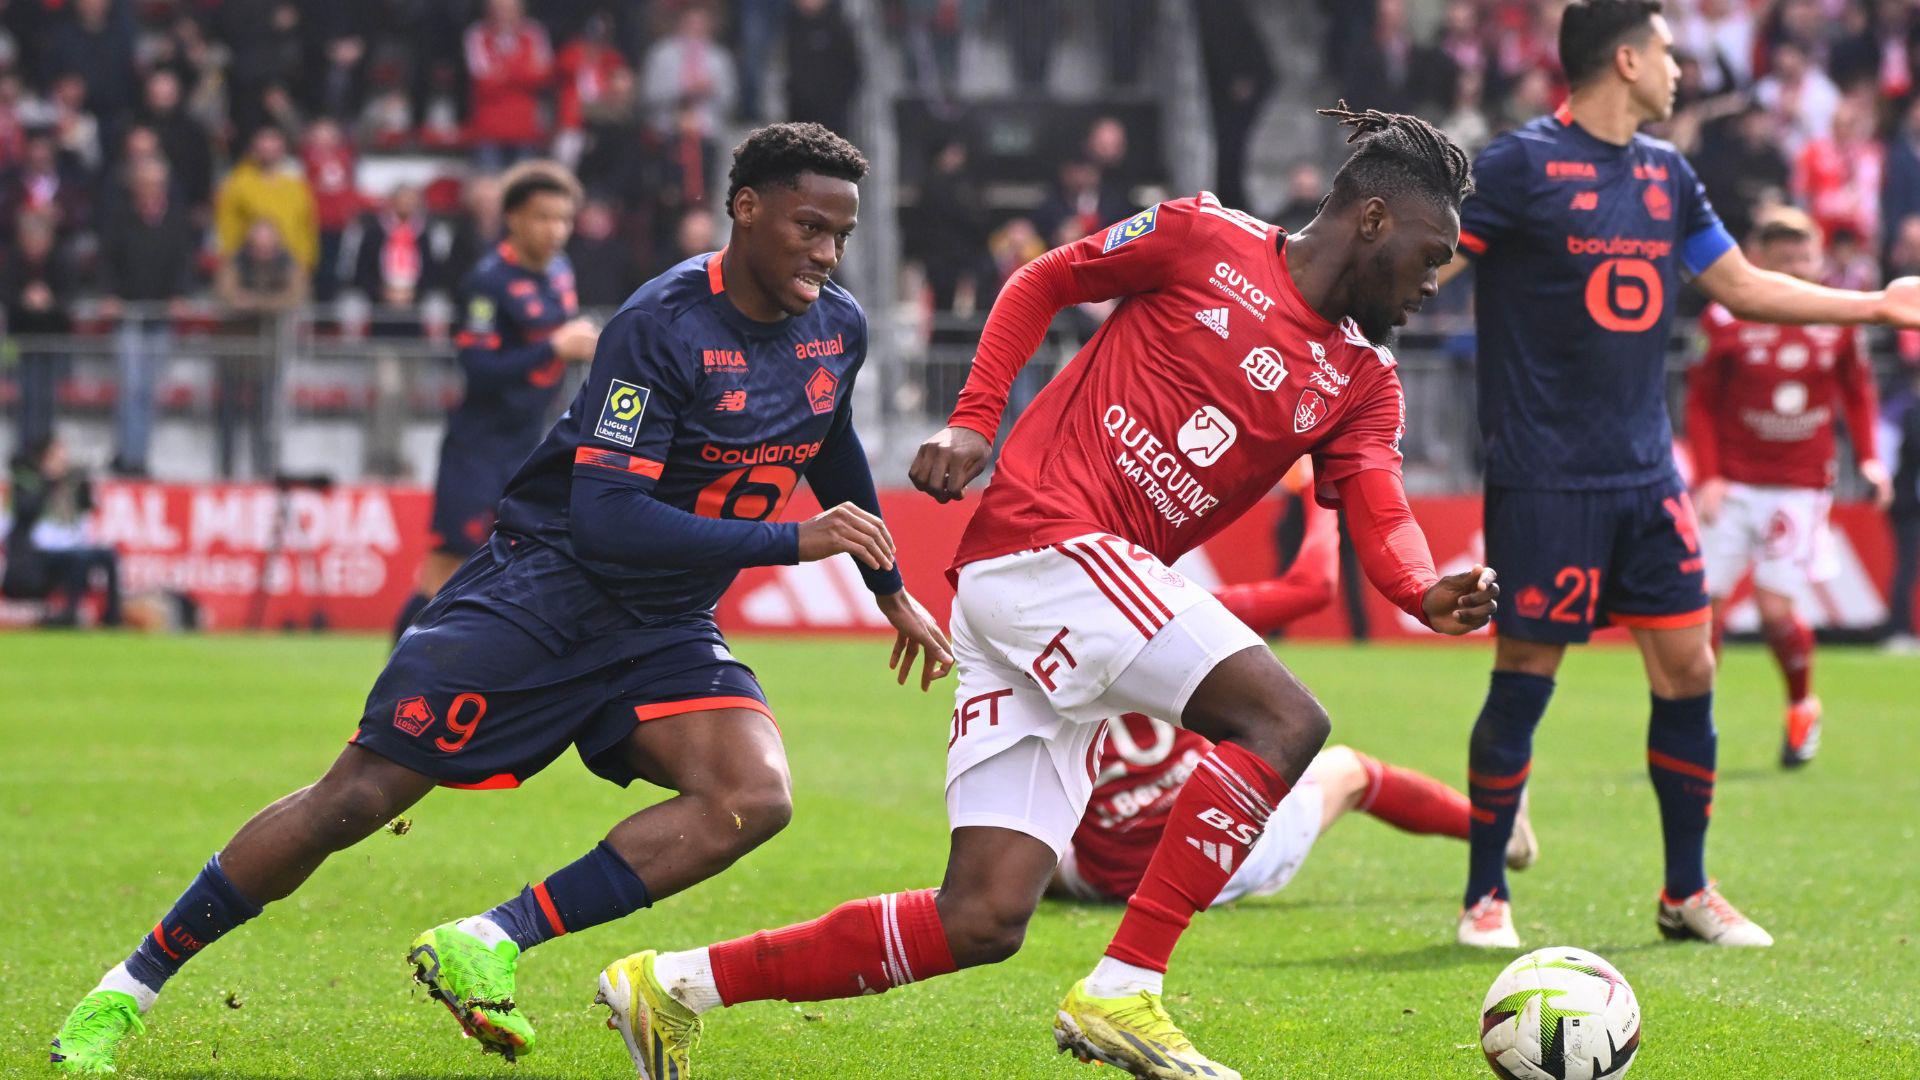 VIDEO | Ligue 1 Highlights: Brest vs Lille